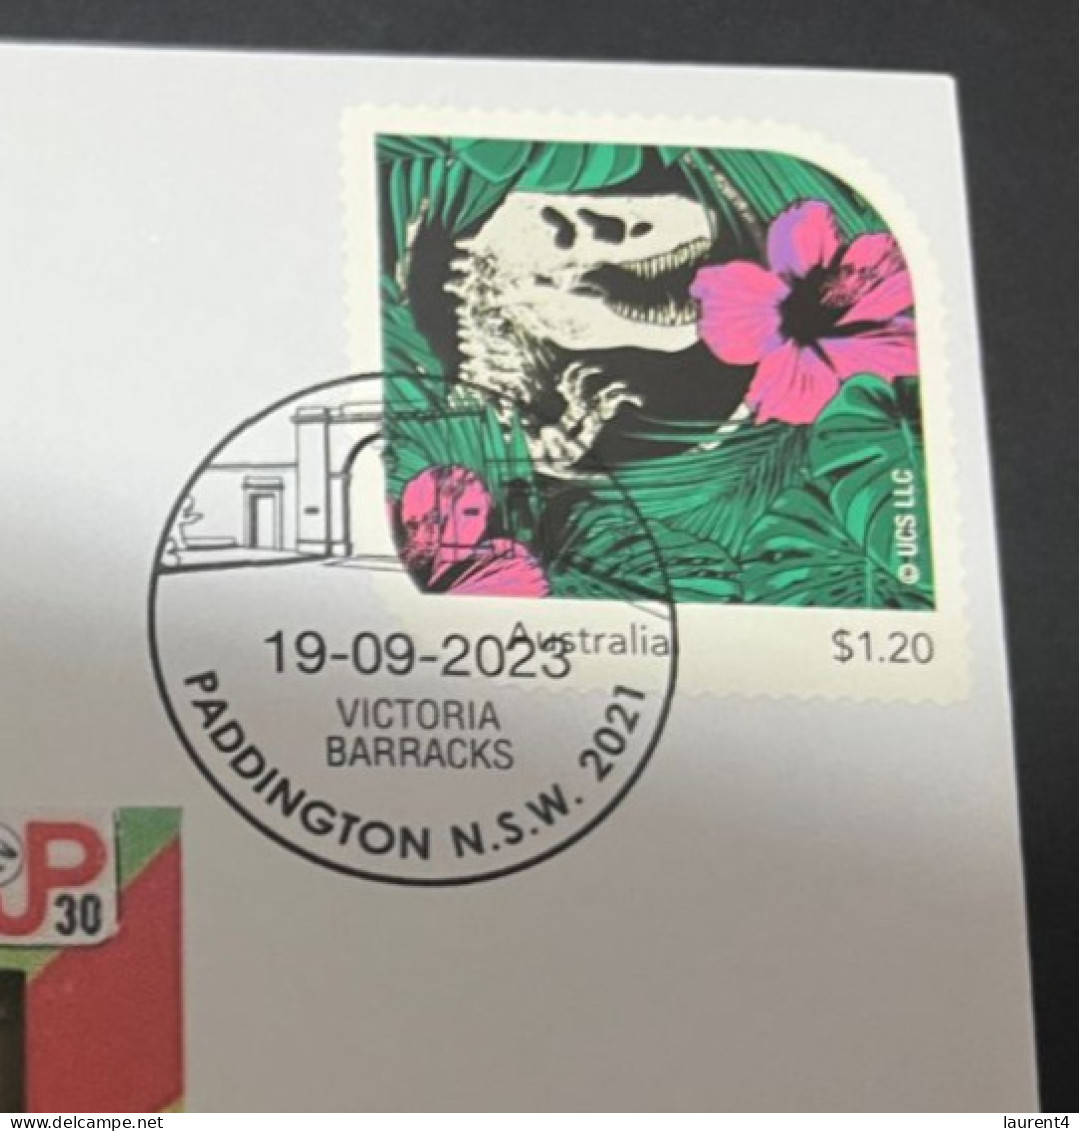 13-5-2024 (45 Z 2) Australian Personalised Stamp Isssued For Jurassic Park 30th Anniversary (Dinosaur) - Préhistoriques